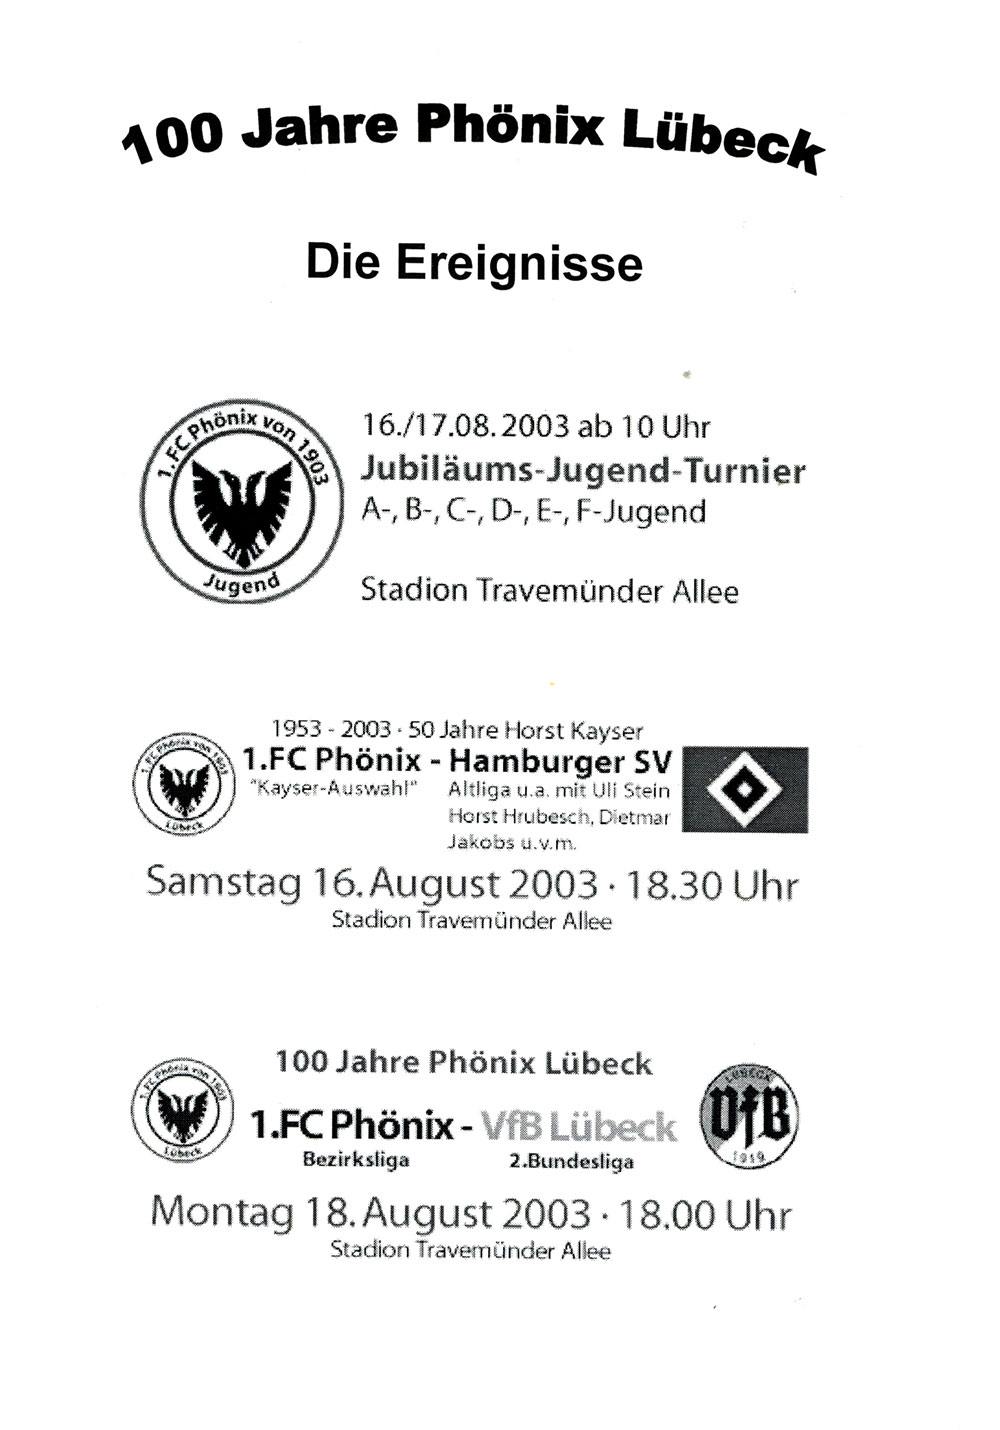 Der PHÖNIX Express, Sonderheft 2003